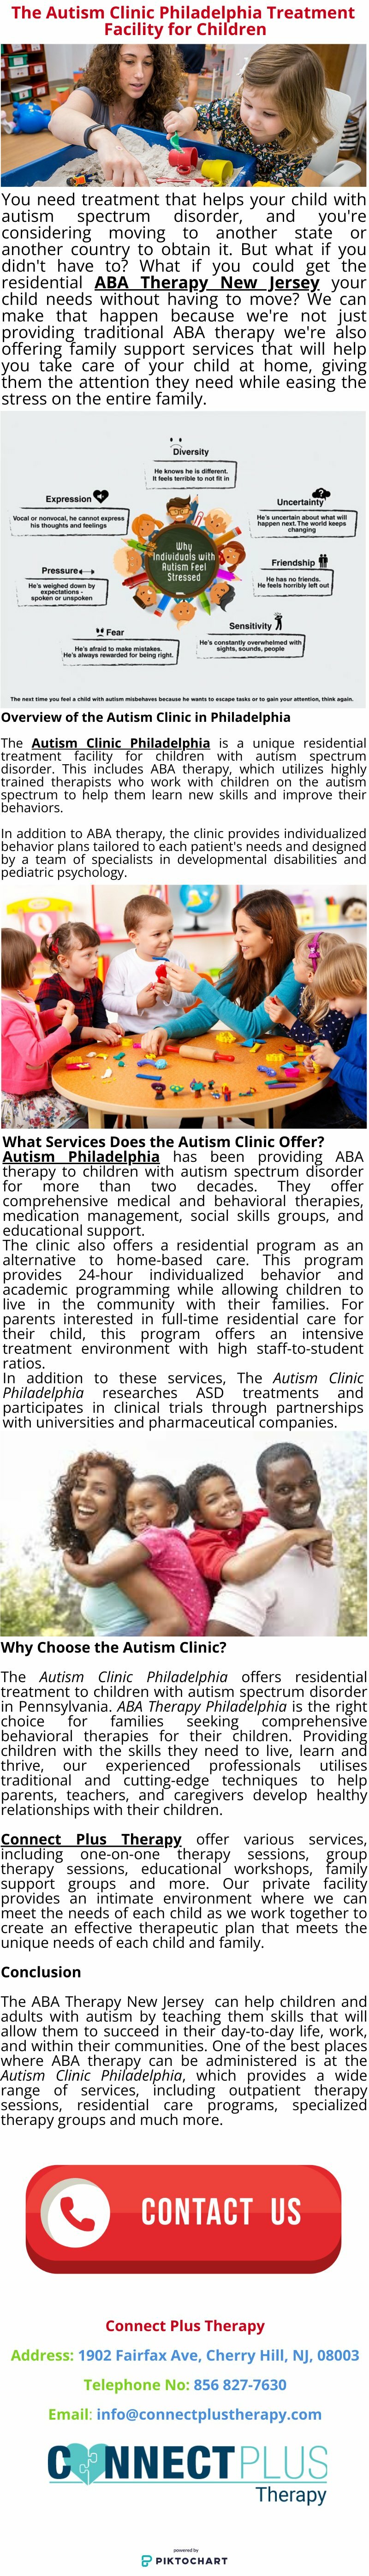 The Autism Clinic Philadelphia Treatment Facility for Children